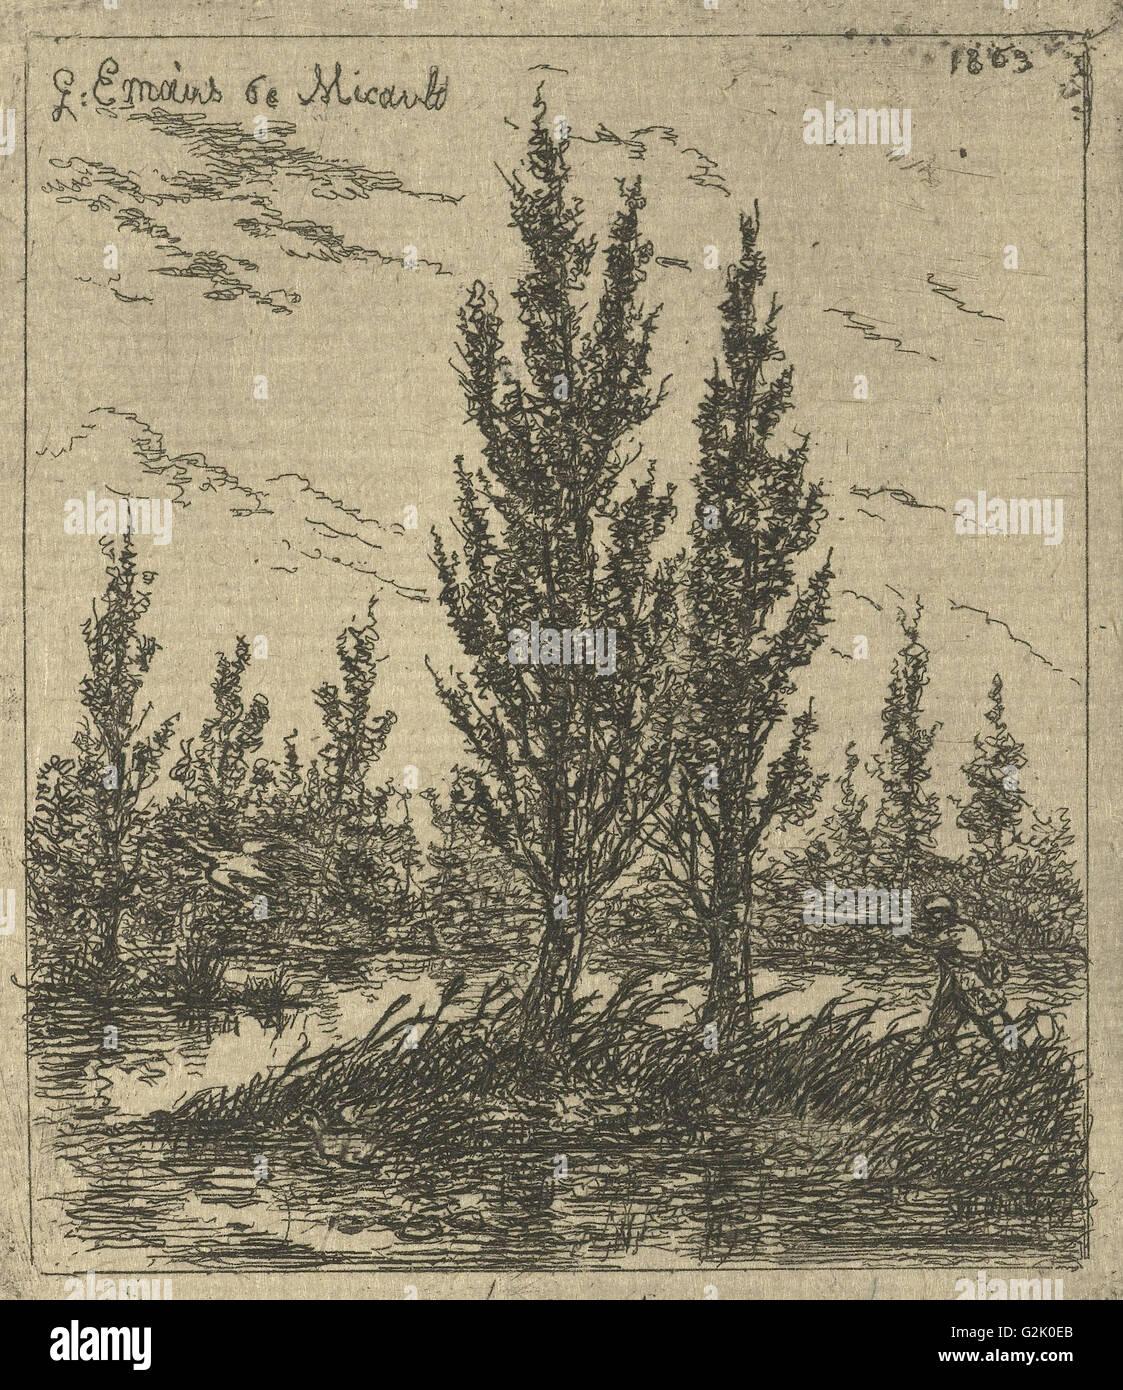 Landscape with hunter and poplars, print maker: Gerardus Emaus de Micault, 1863 Stock Photo